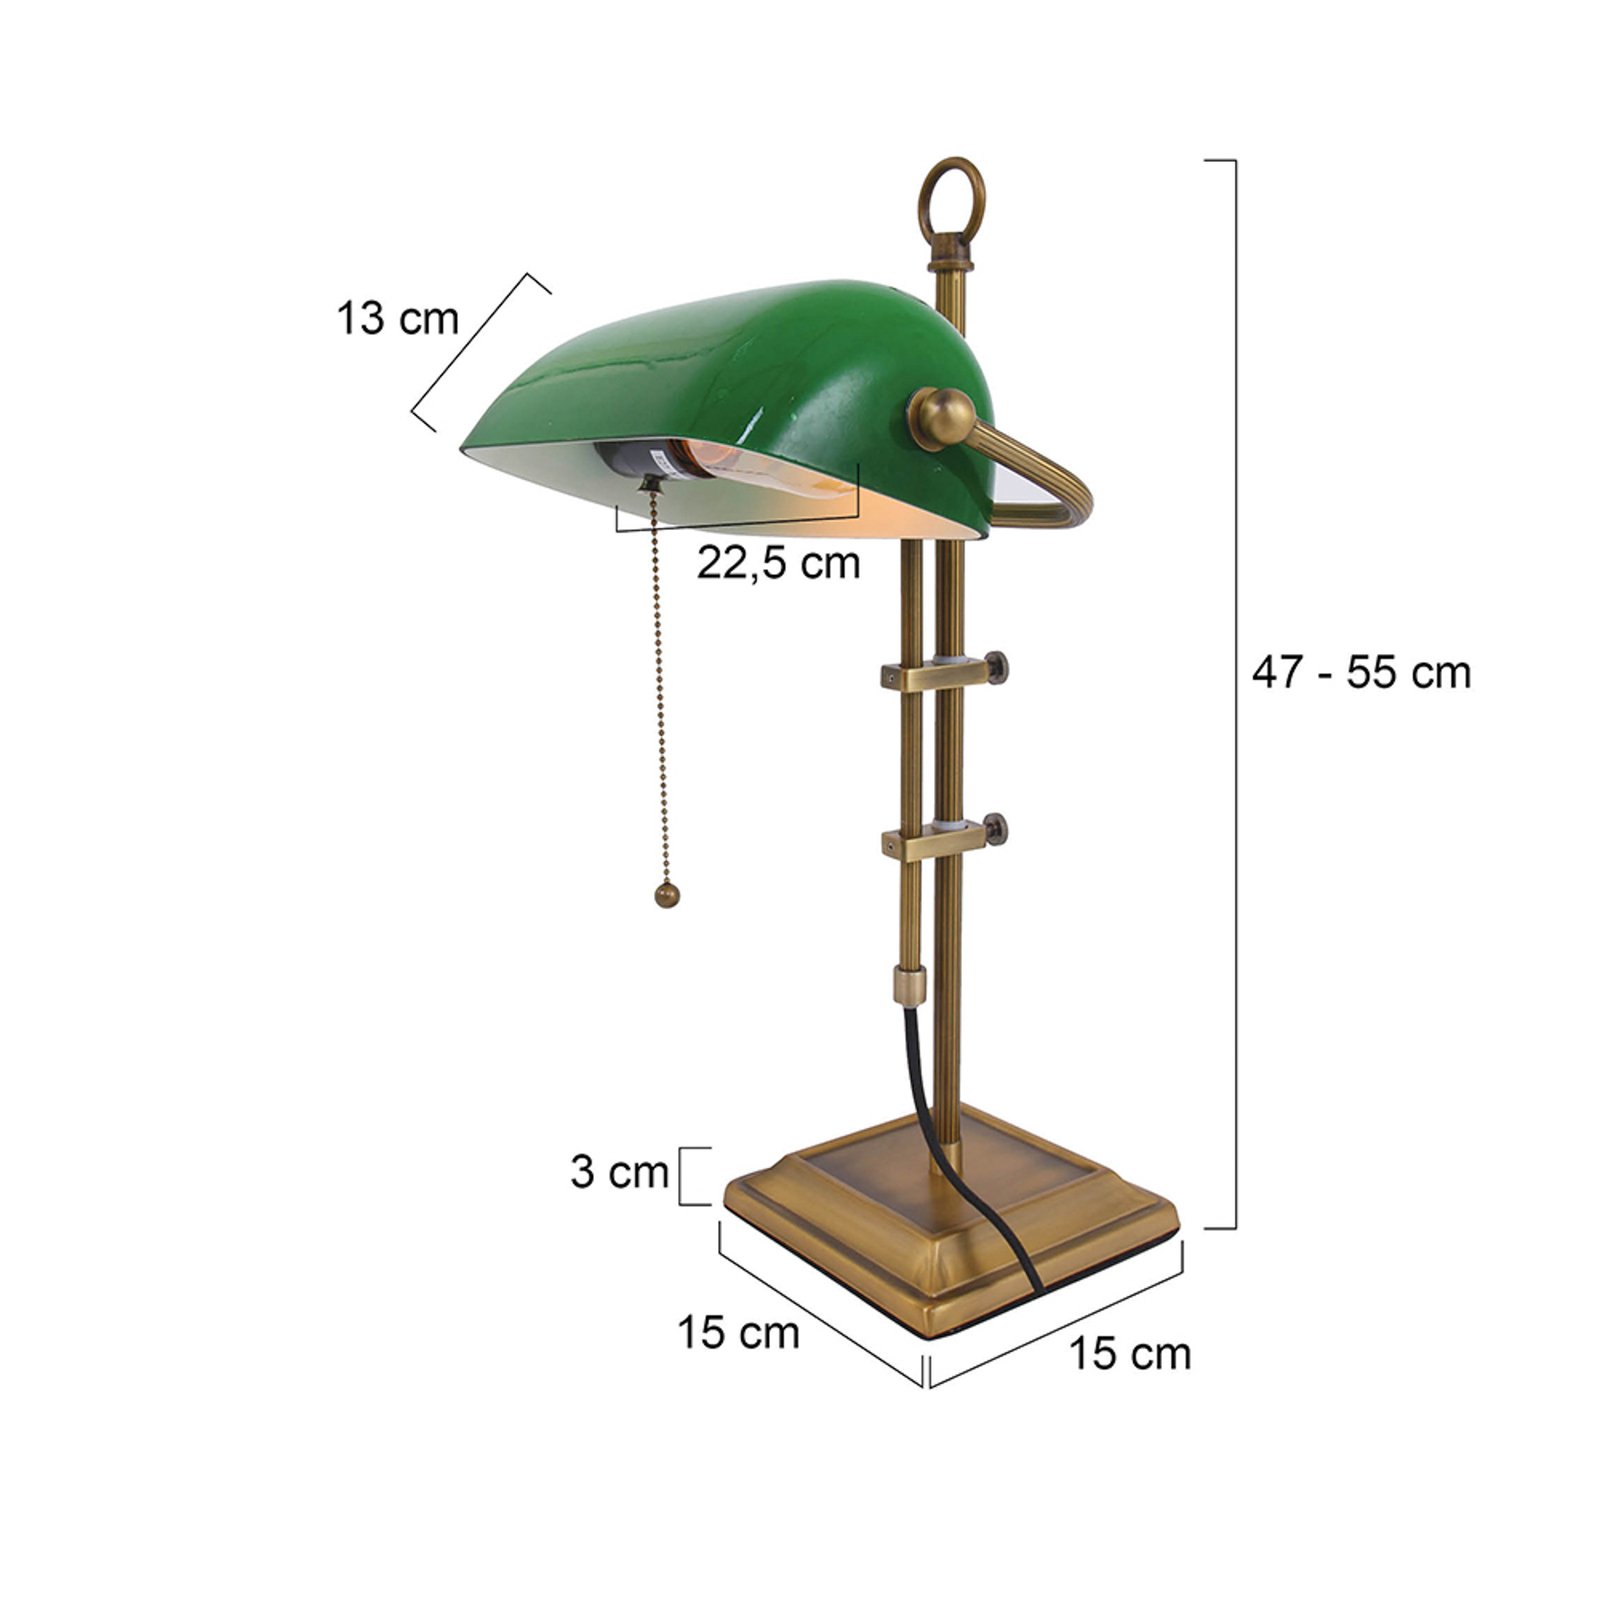 Ancilla desk lamp, adjustable, bronze/green